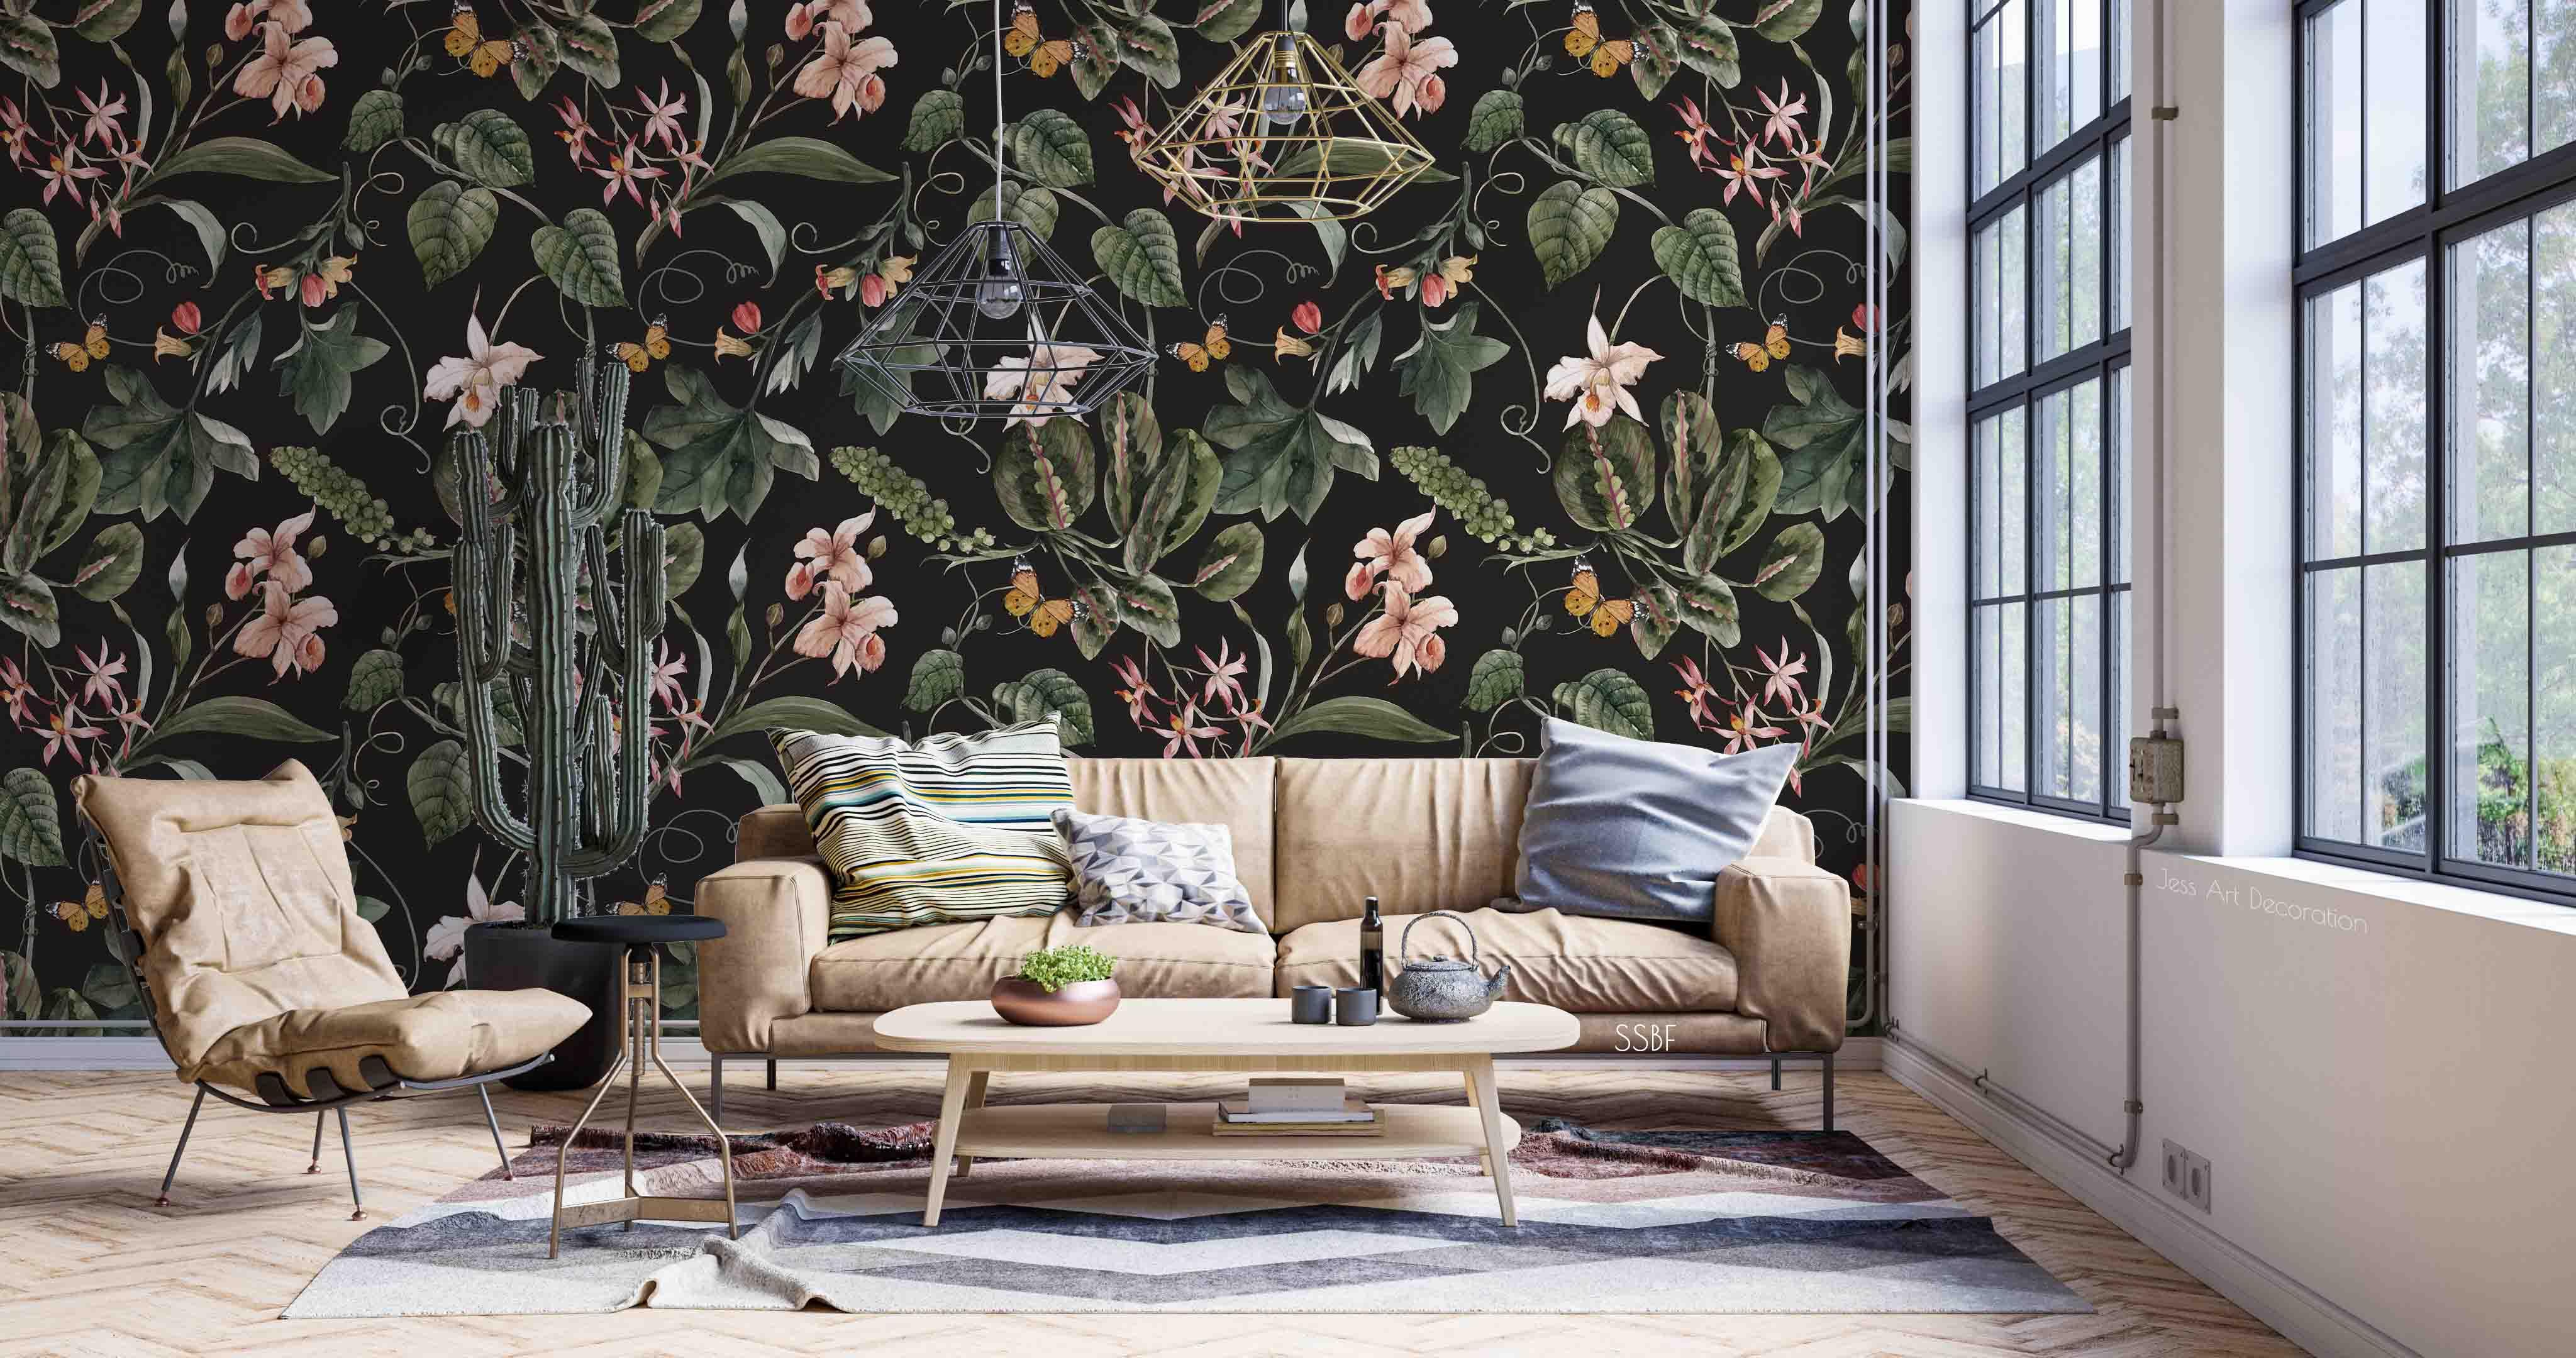 3D Vintage Baroque Art Flower Plant Leaves Black Background Wall Mural Wallpaper GD 3580- Jess Art Decoration